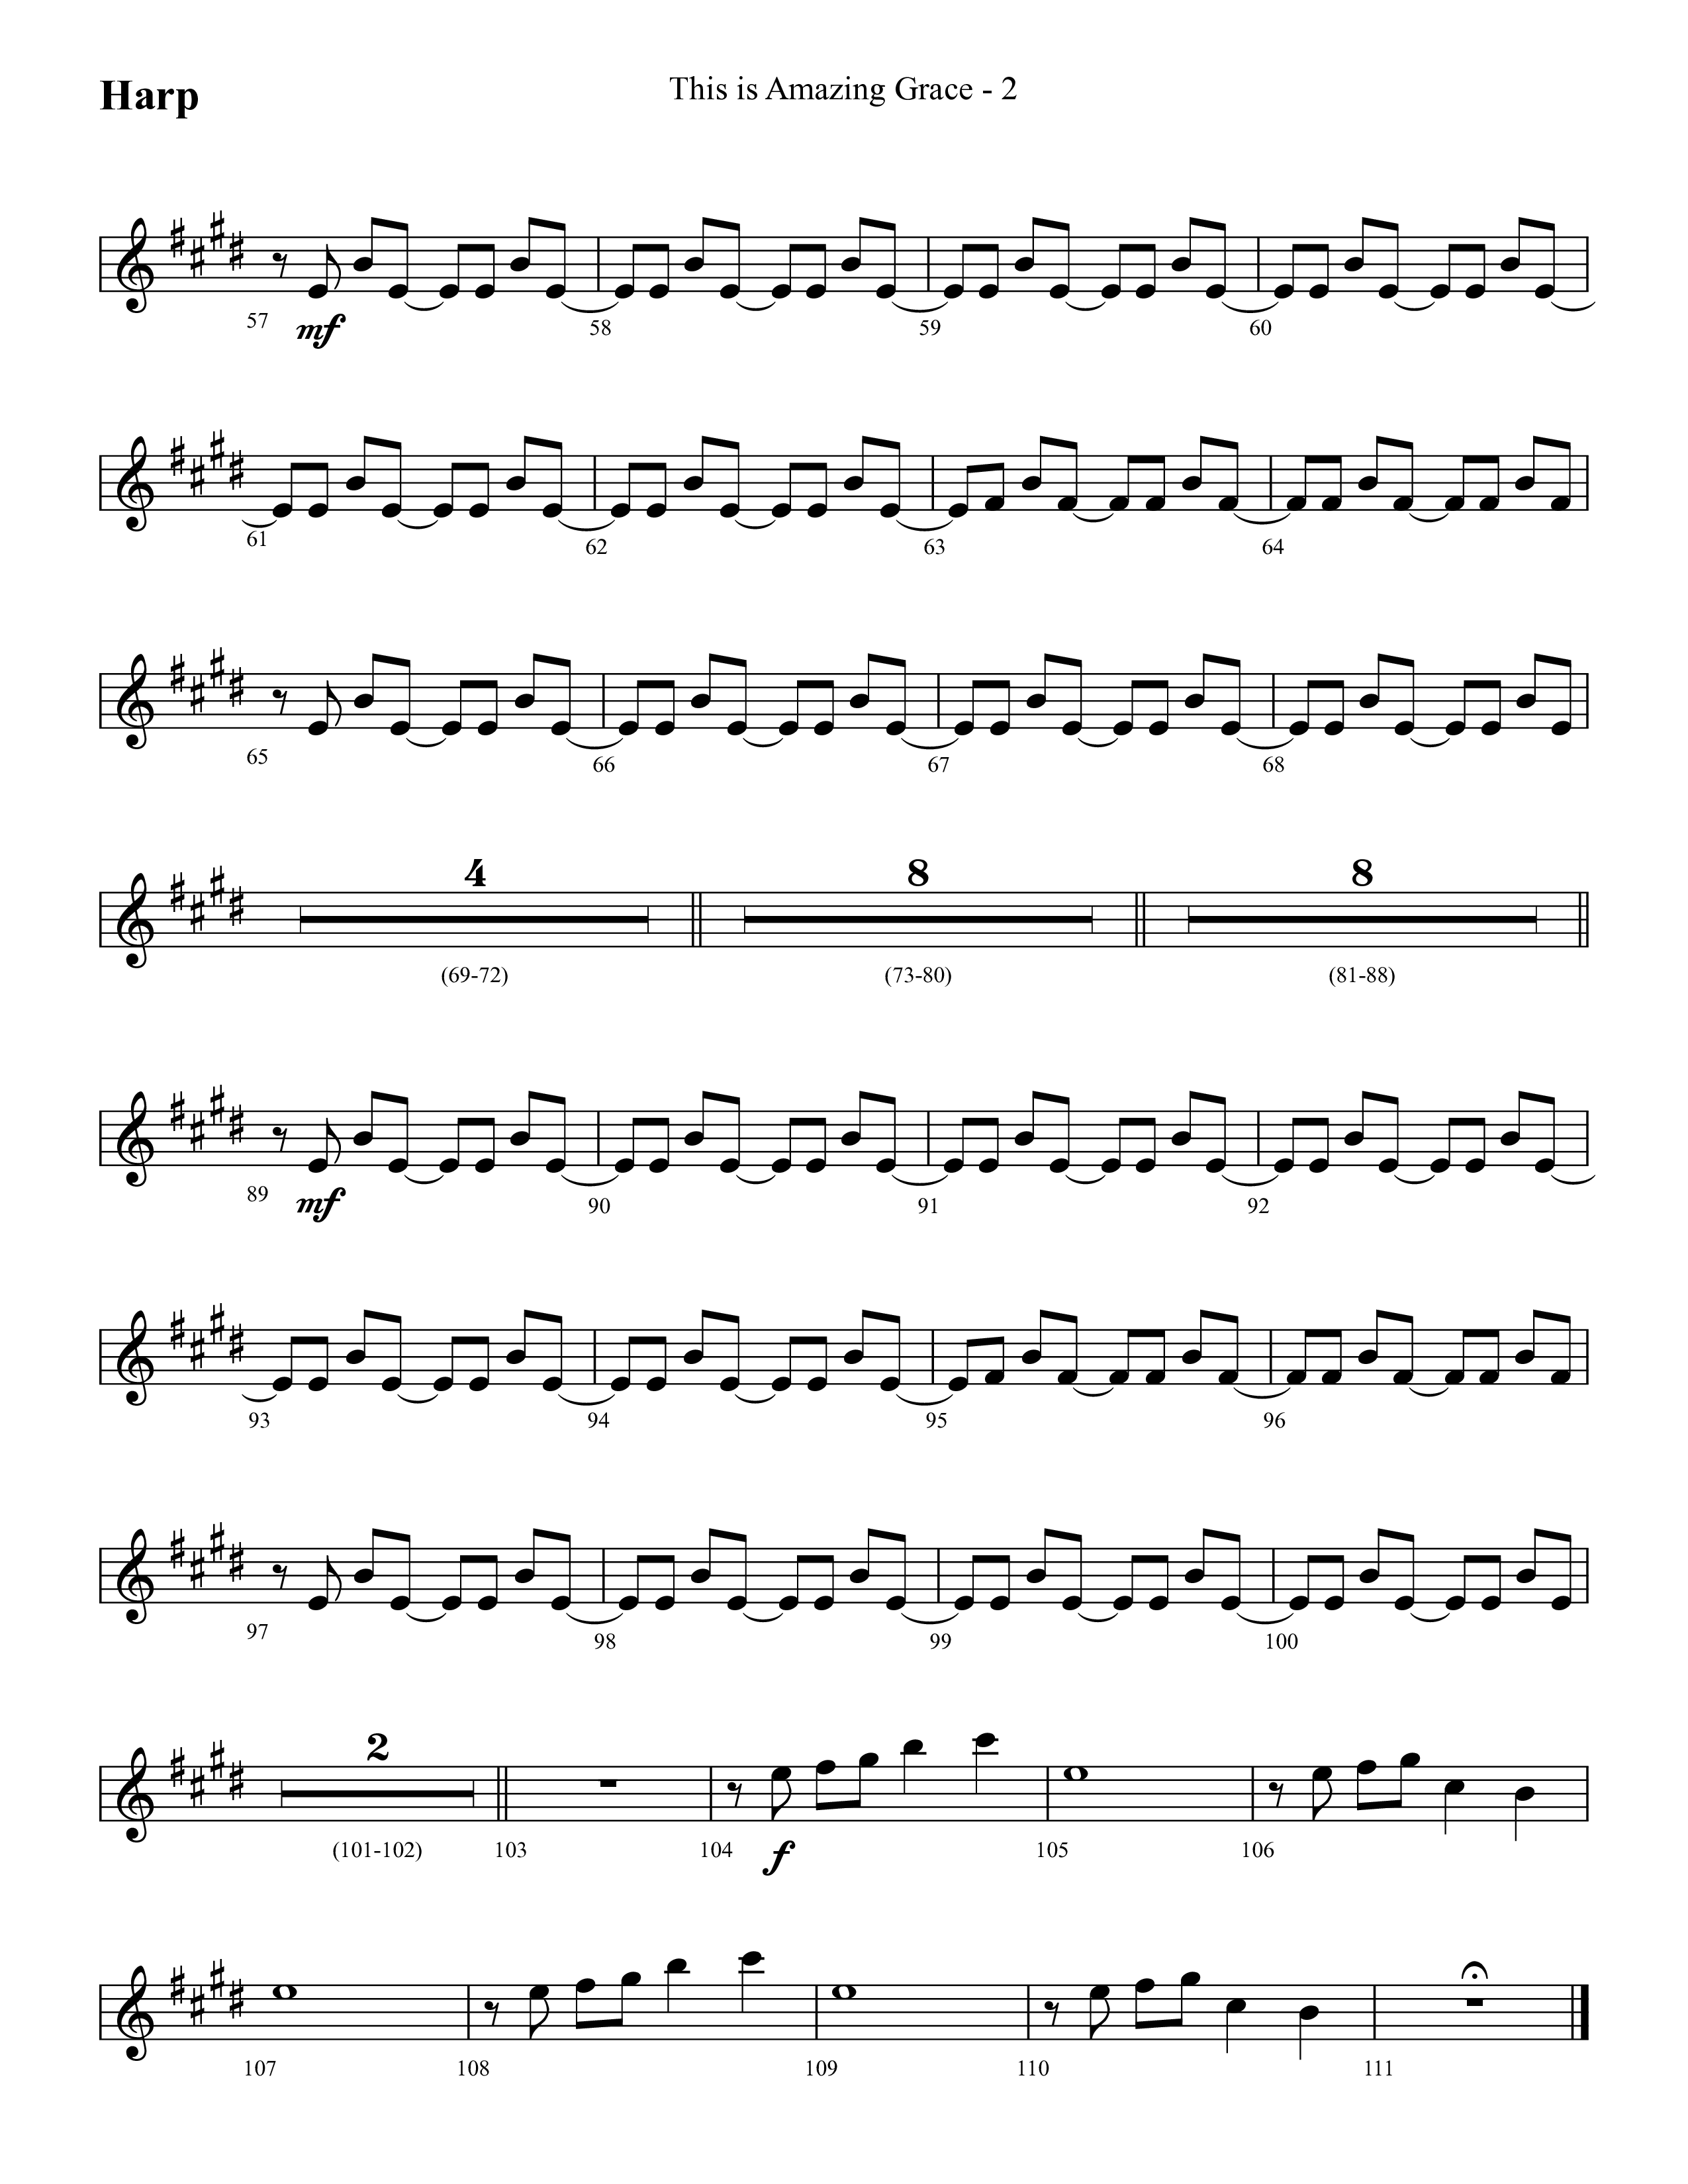 This Is Amazing Grace (Choral Anthem SATB) Harp (Lifeway Choral / Arr. Cliff Duren)